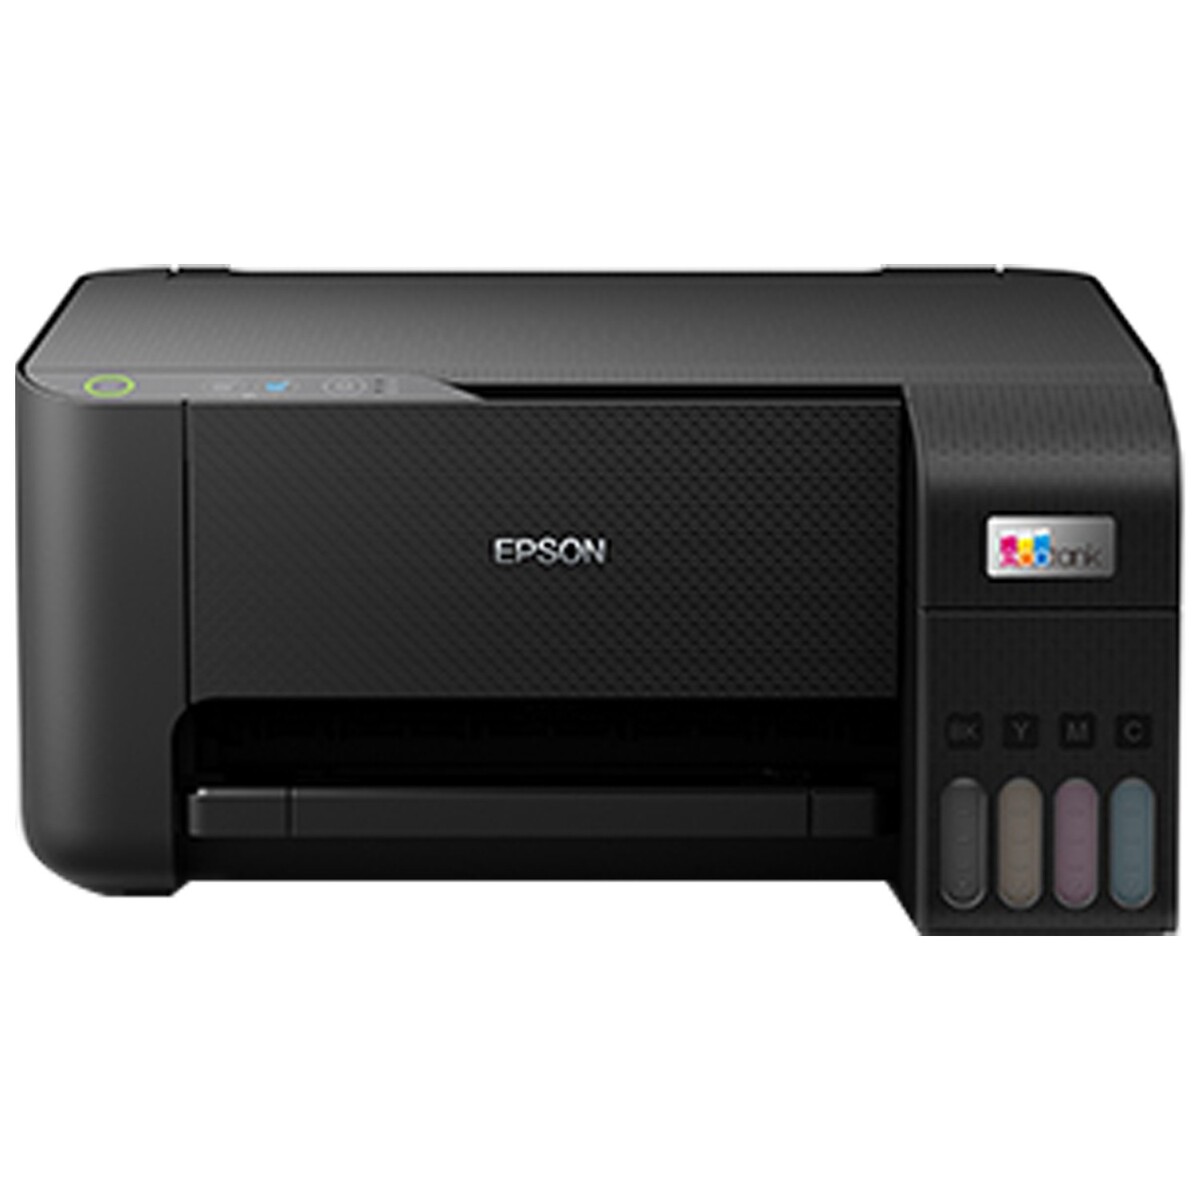 Epson EcoTank L3250 All-in-One Ink Tank Printer